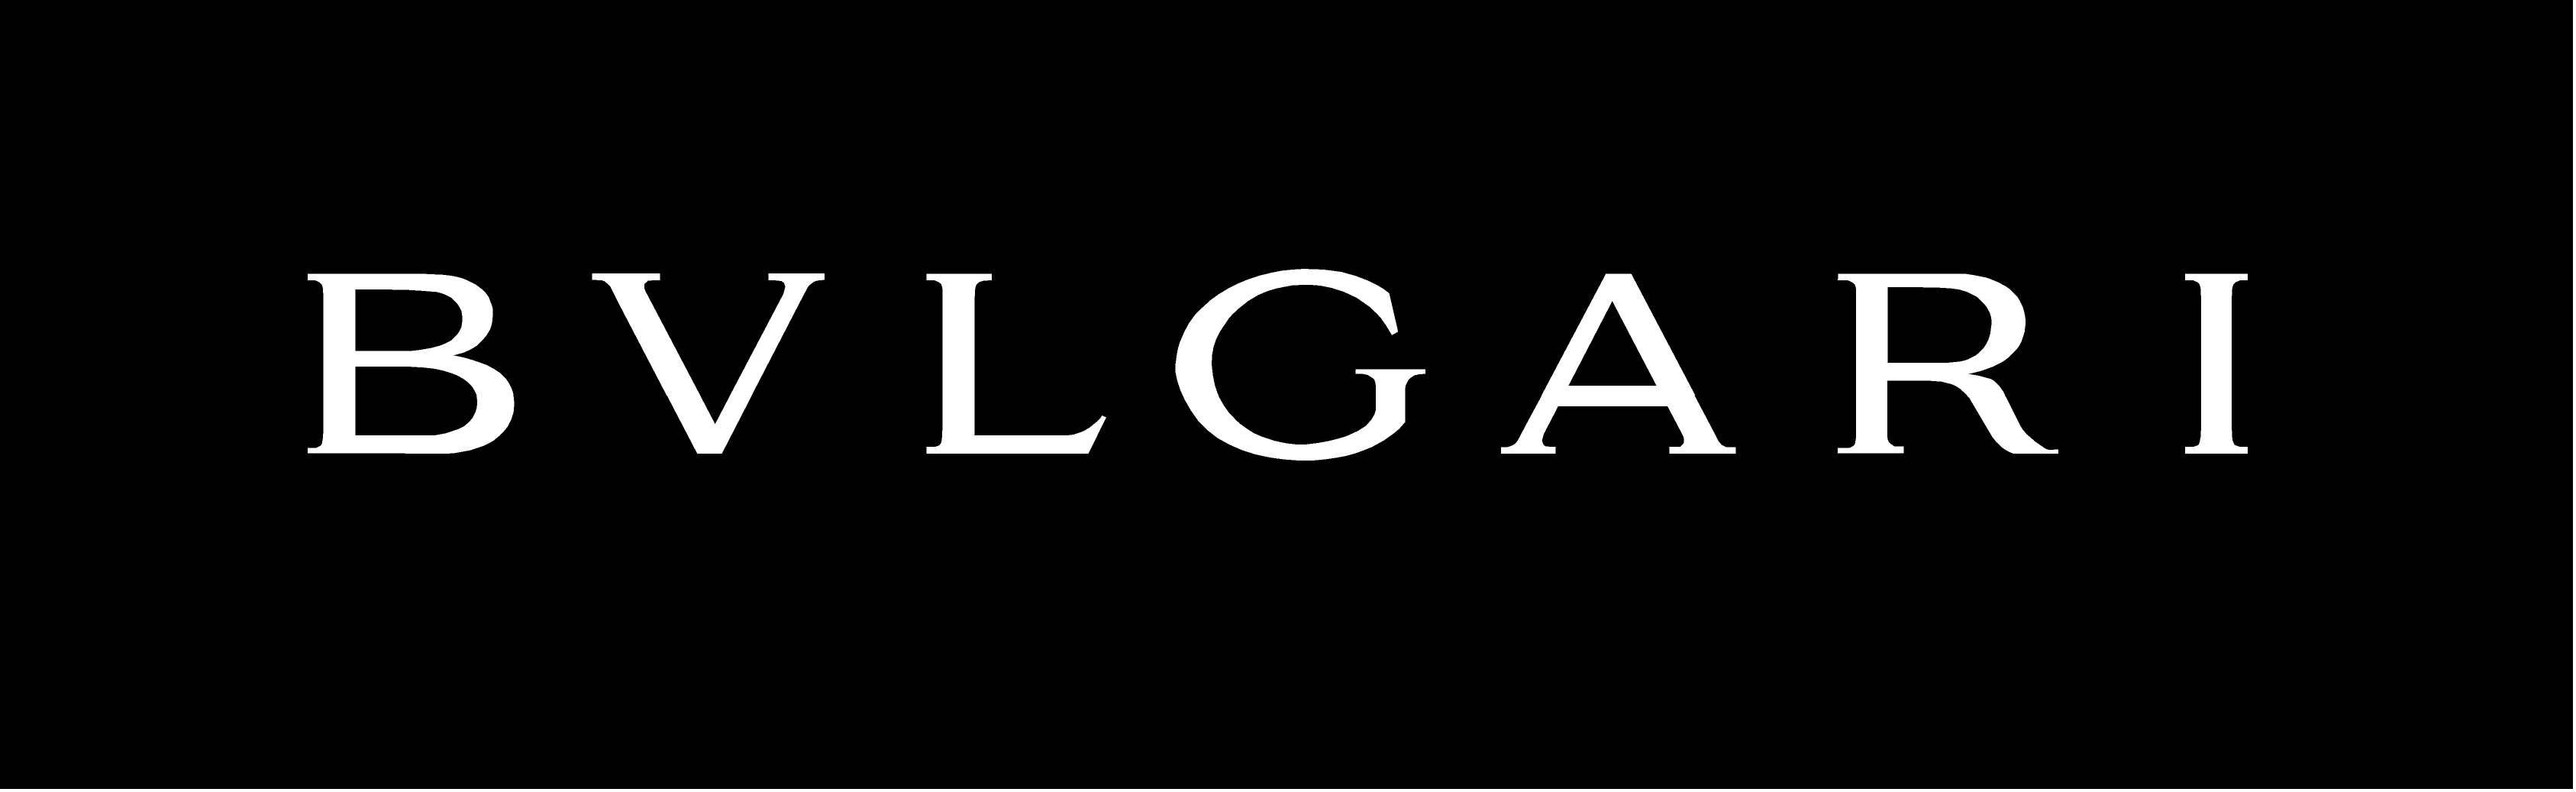 Bvlgari Perfume Logo - Bvlgari Collection. Pabango Co